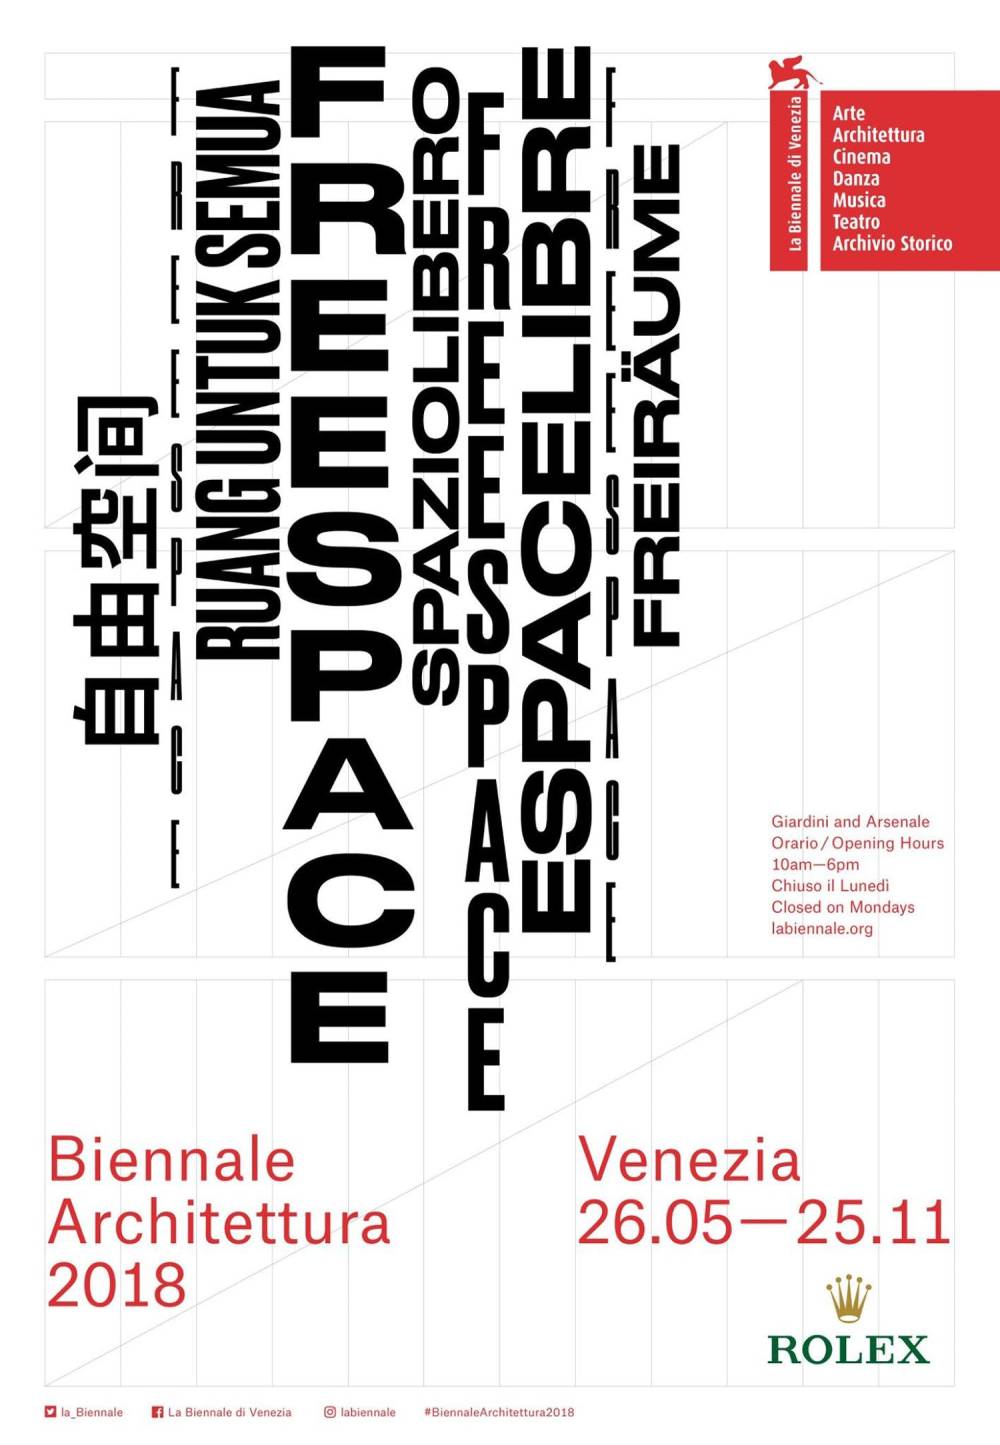  Biennale Architettura 2018, Venice, Italy 